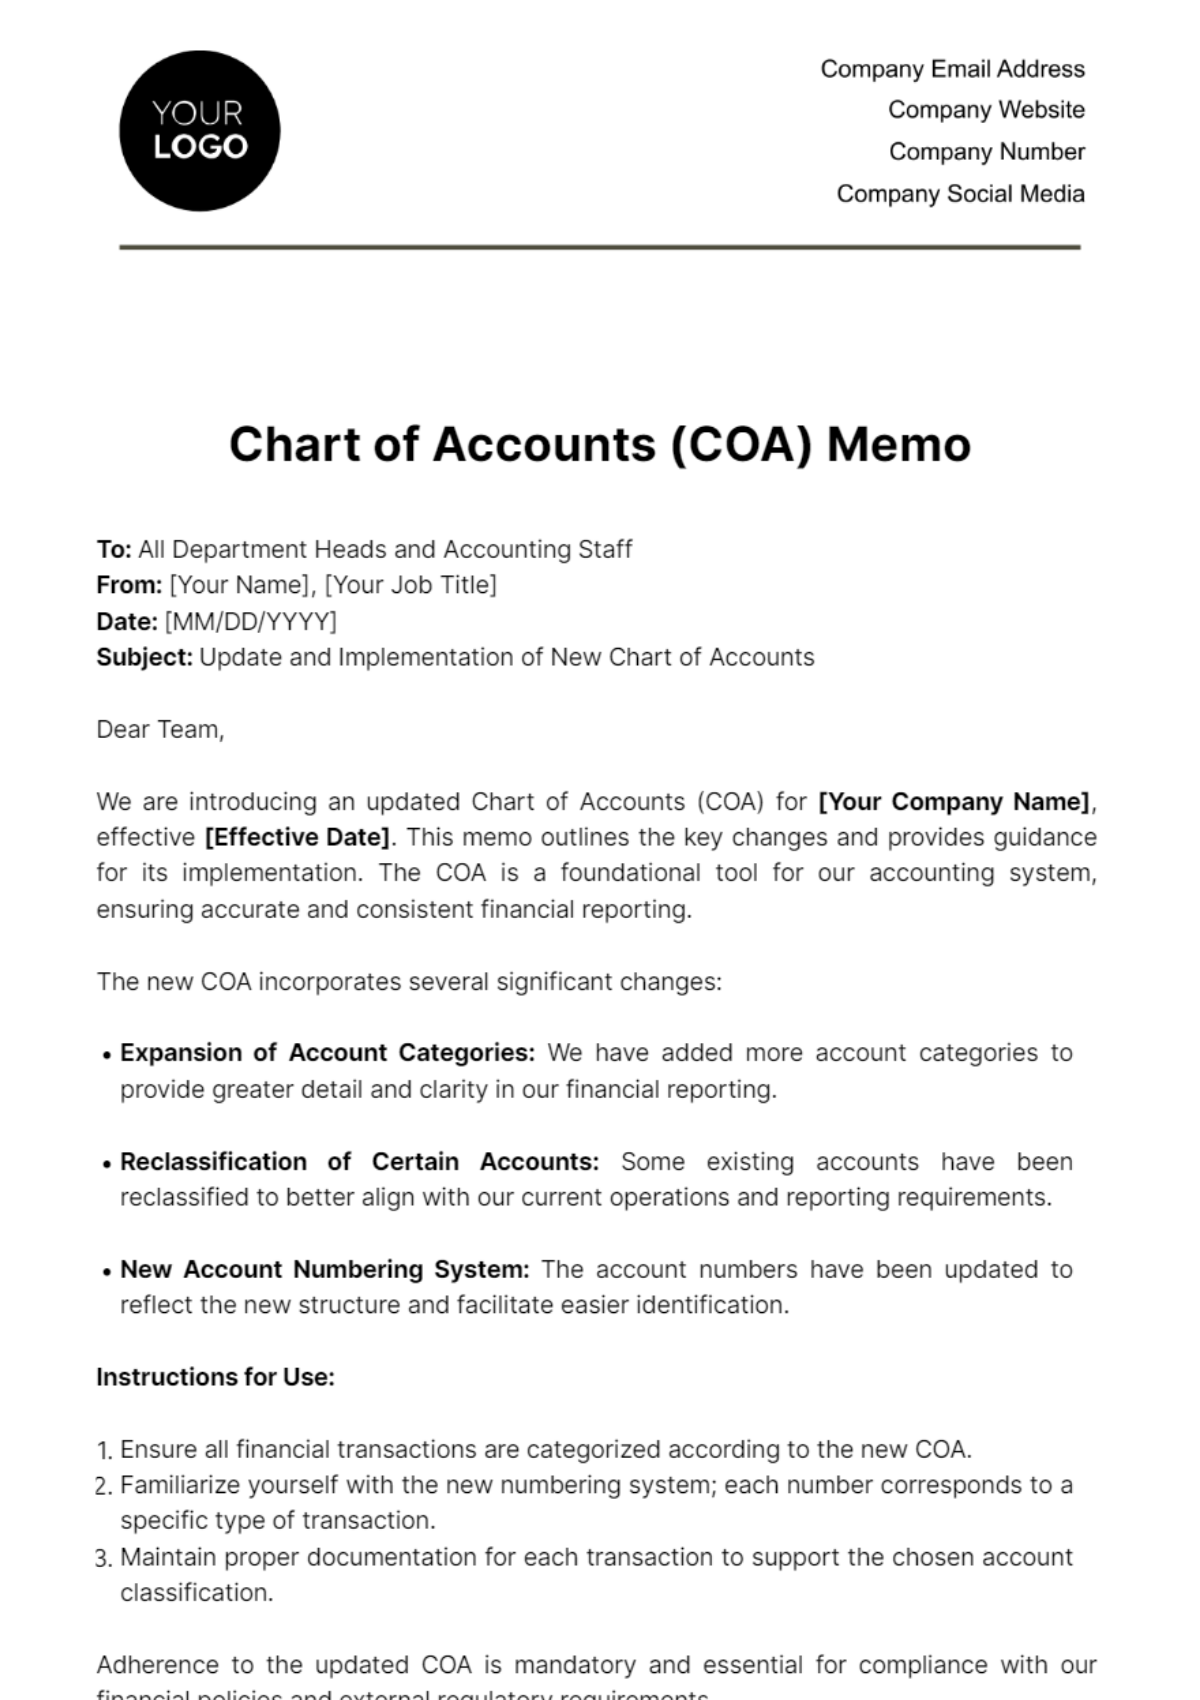 Free Chart of Accounts Memo Template